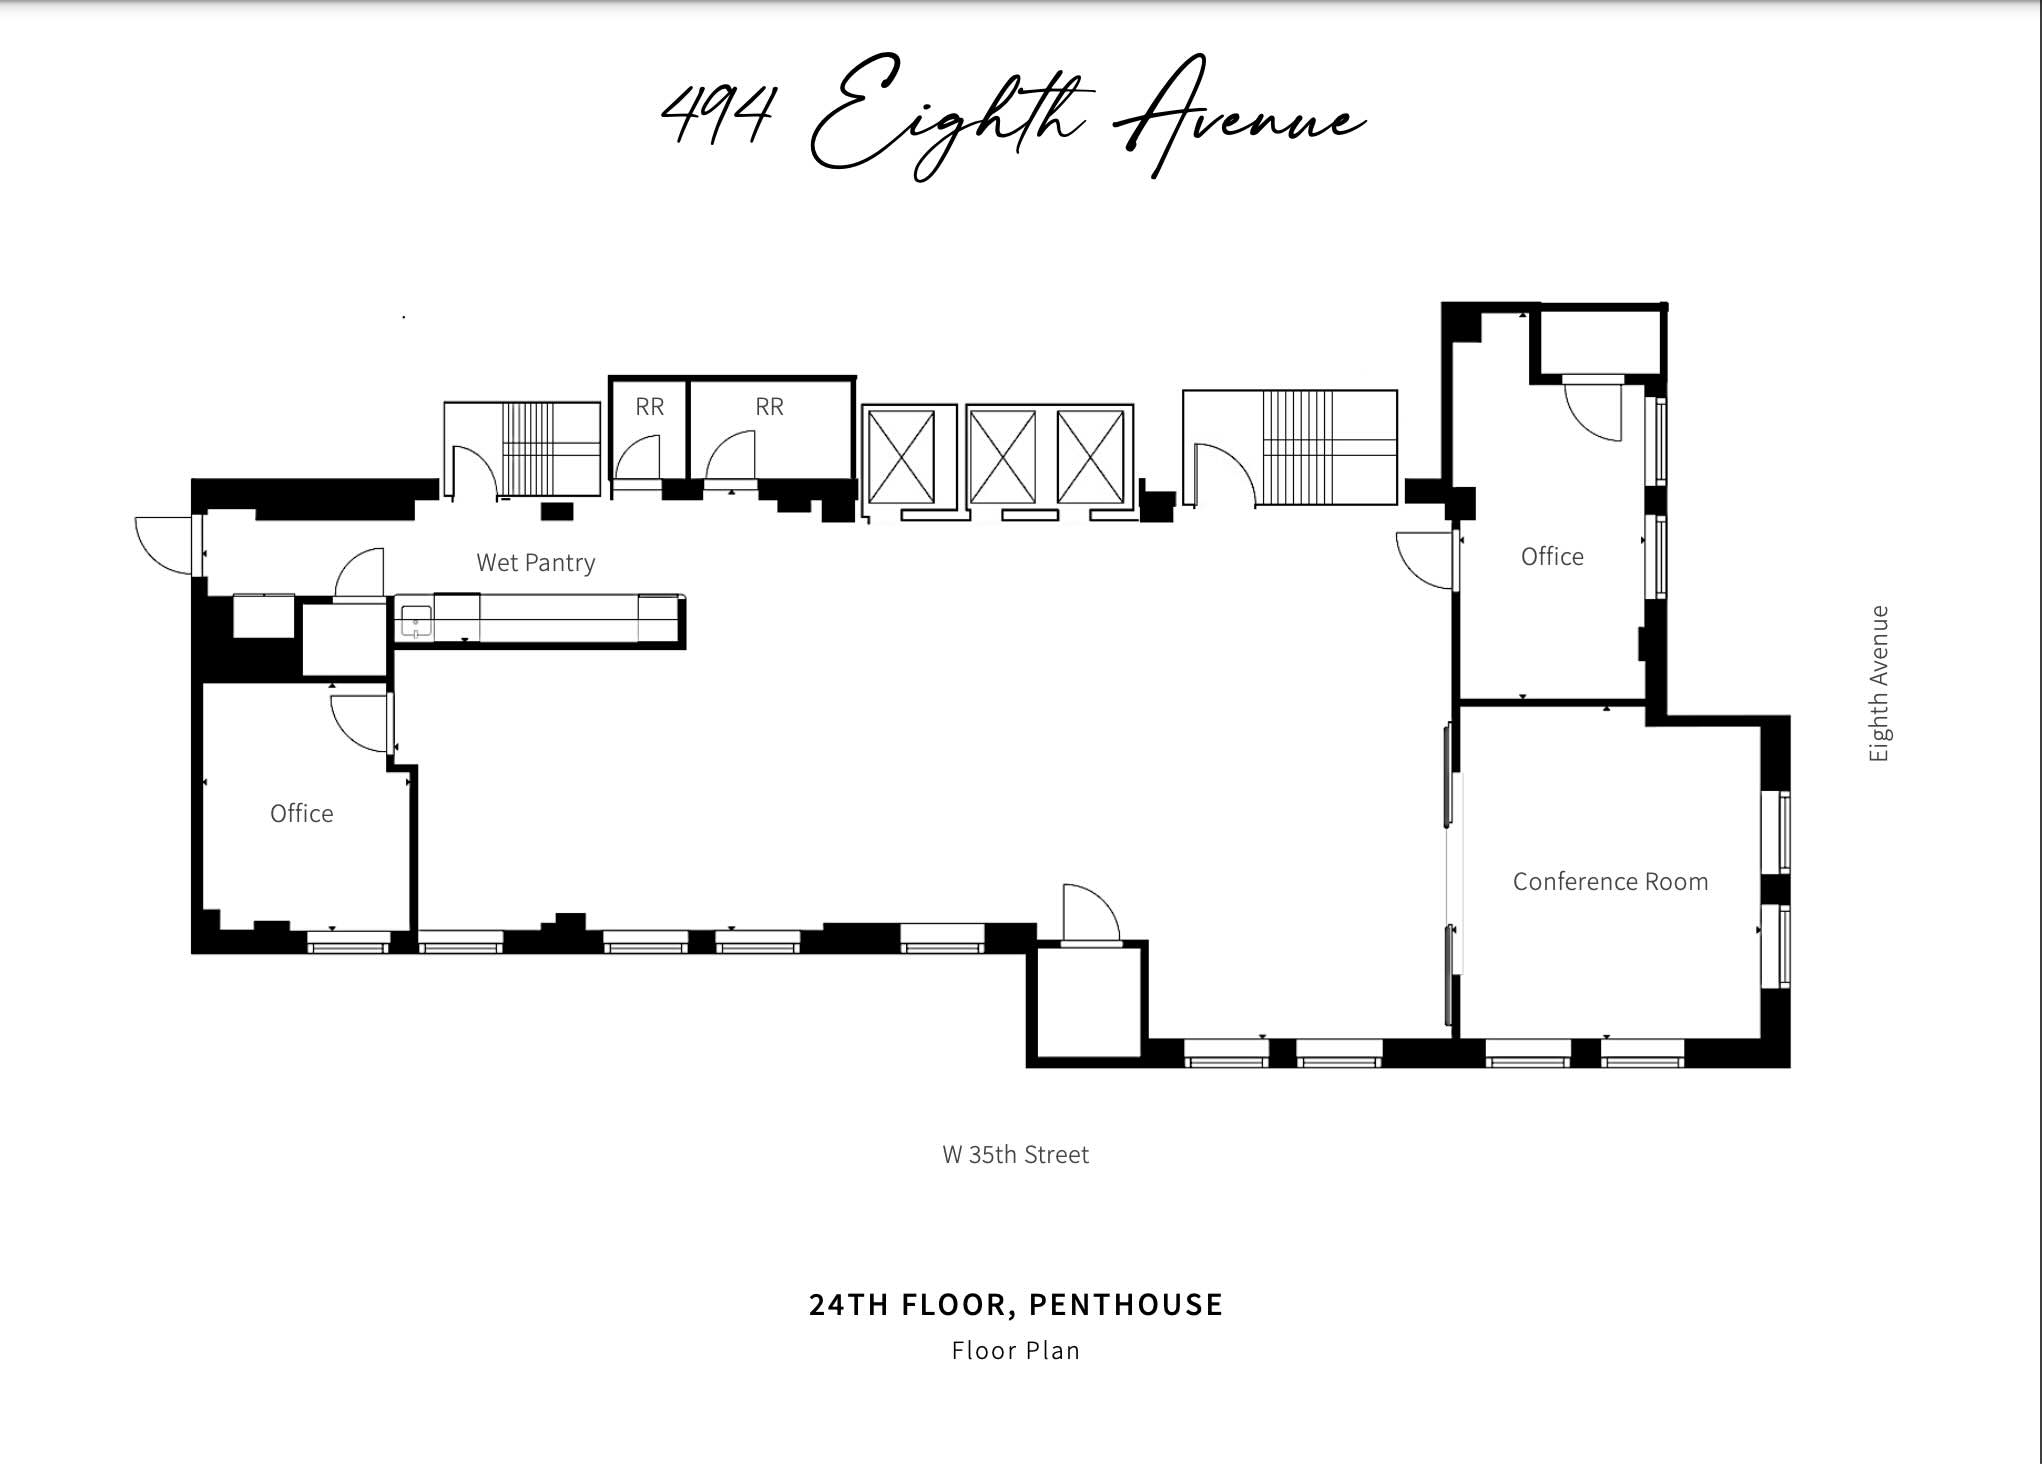 494 Eighth Avenue Office Space - Floor plan